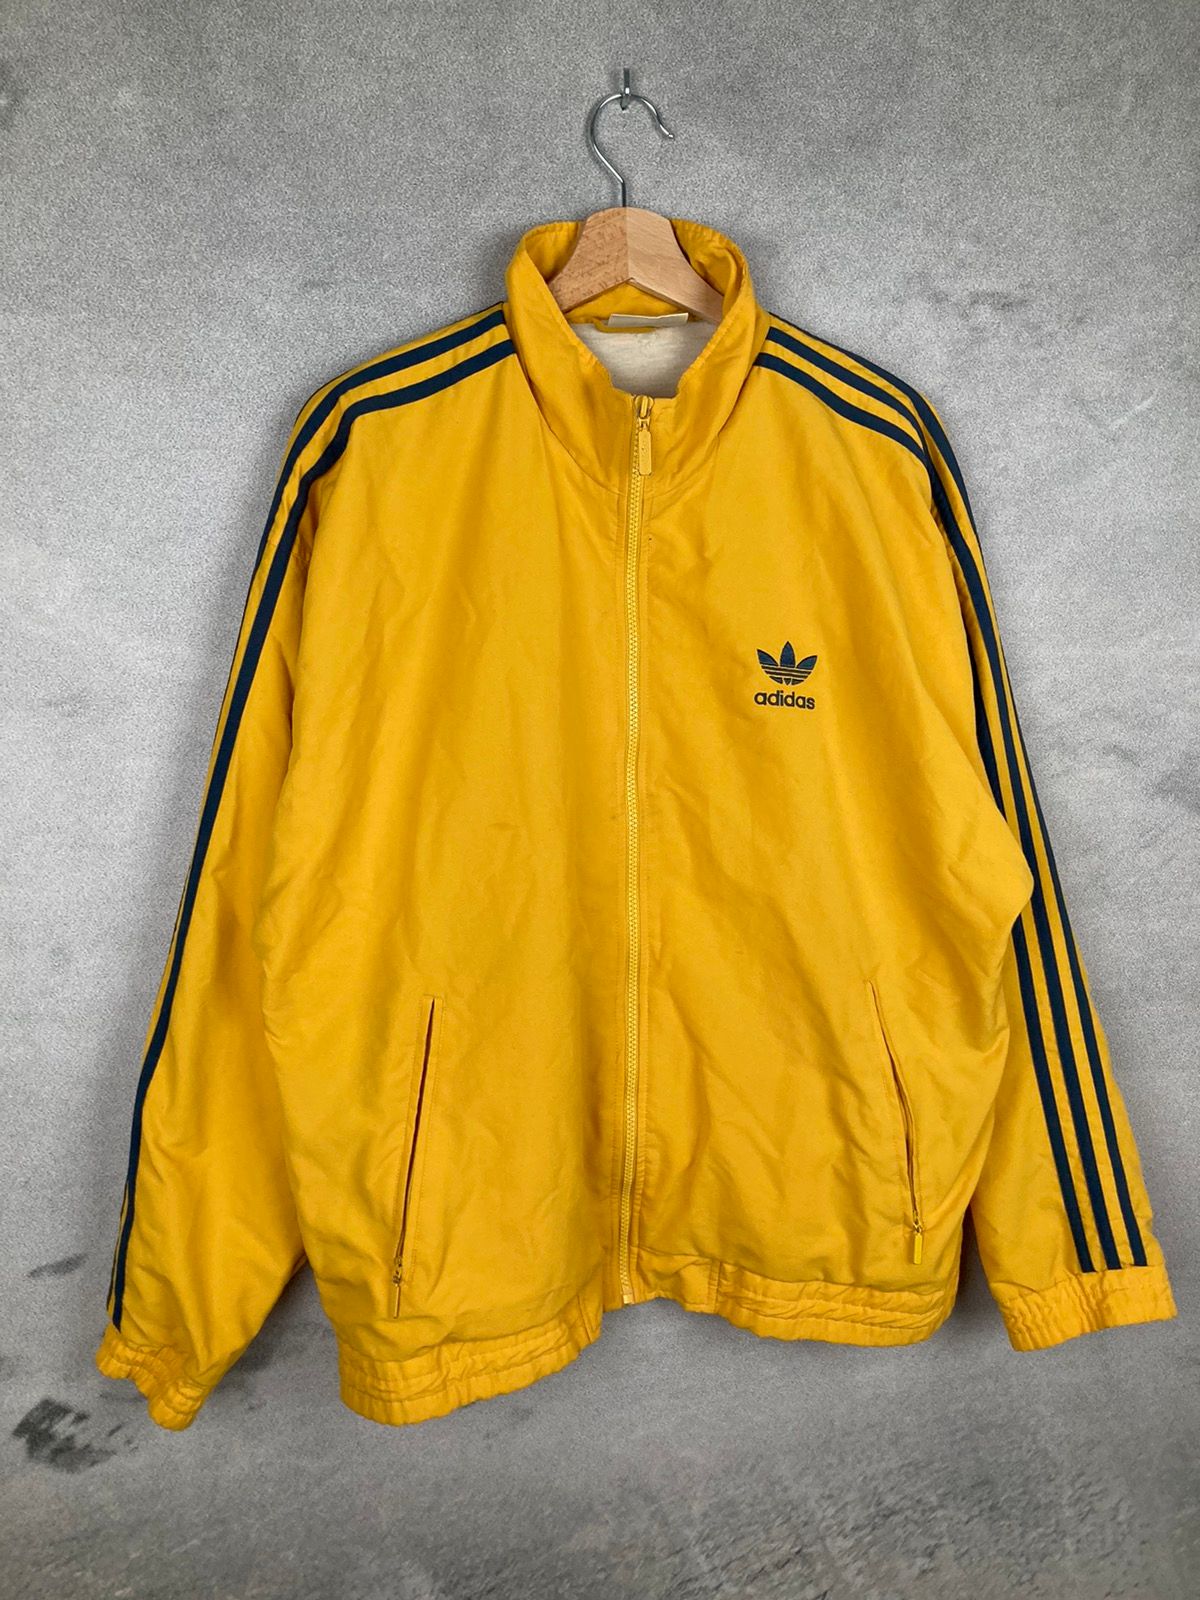 Adidas Vintage Adidas 80s/90s Nylon Light Jacket Retro Size US L / EU 52-54 / 3 - 4 Thumbnail